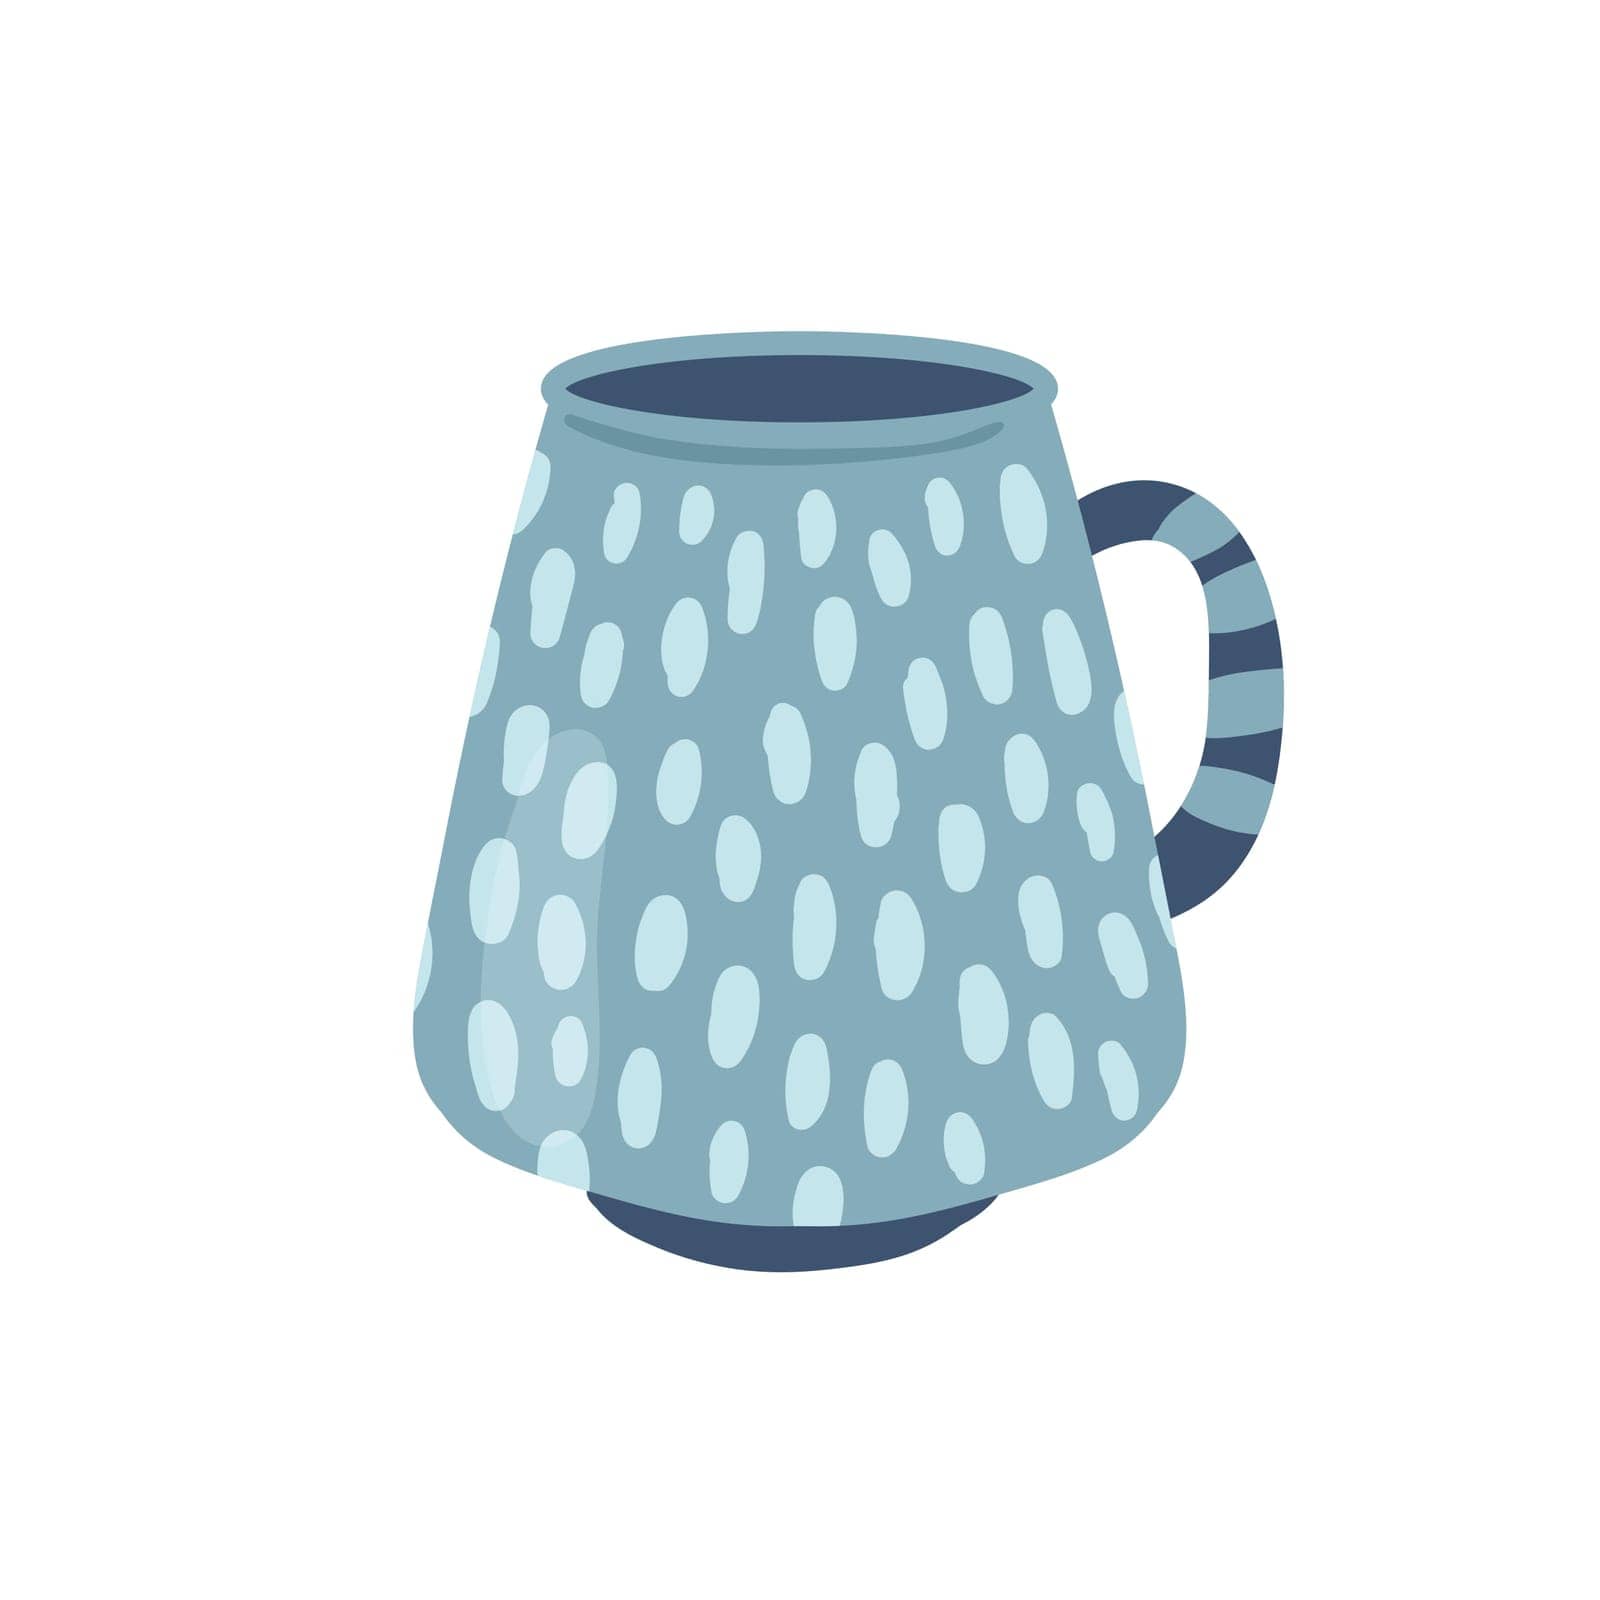 Spotted vintage coffee mug. Breakfast tea ceremony, hot beverage cup vector illustration